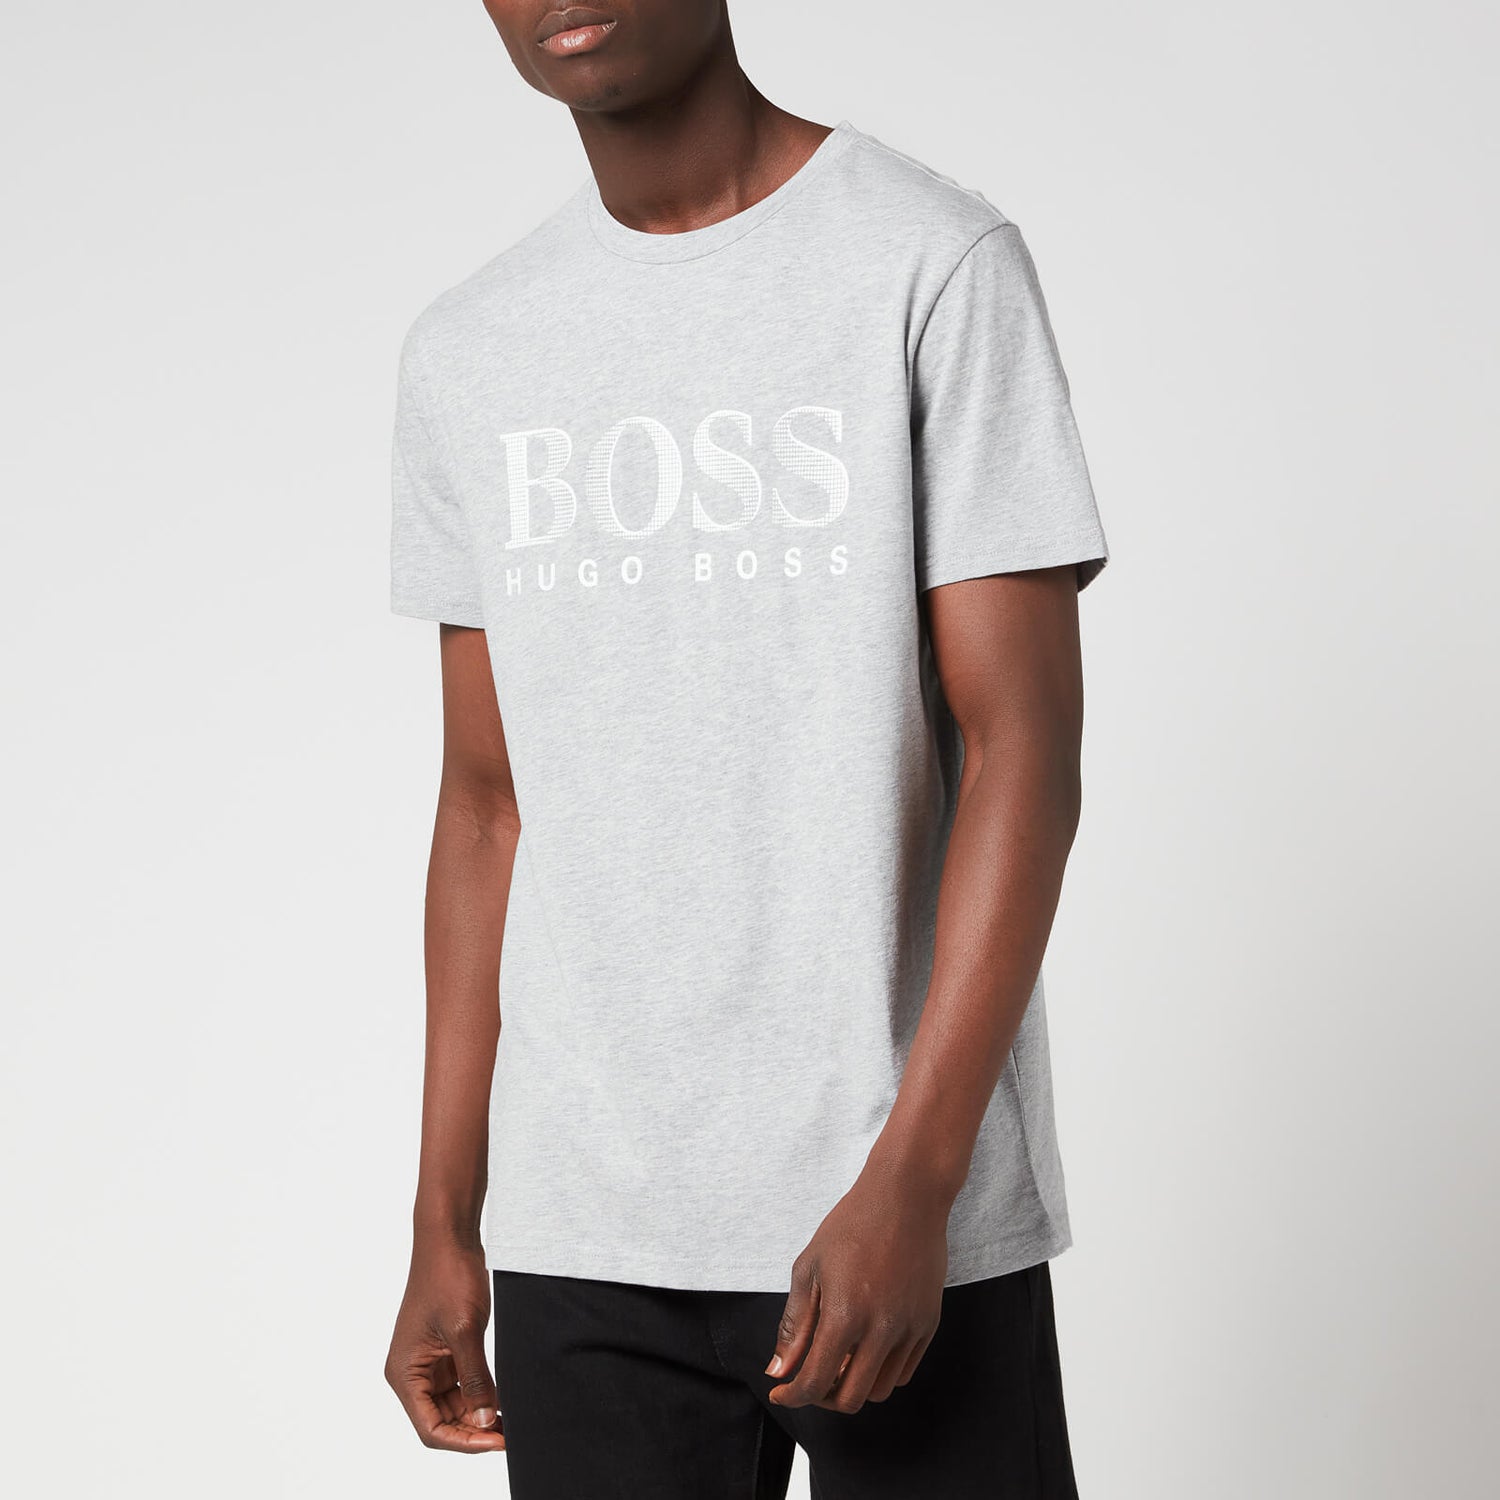 BOSS Bodywear Men's Relaxed Fit Upf 50+ T-Shirt - Silver